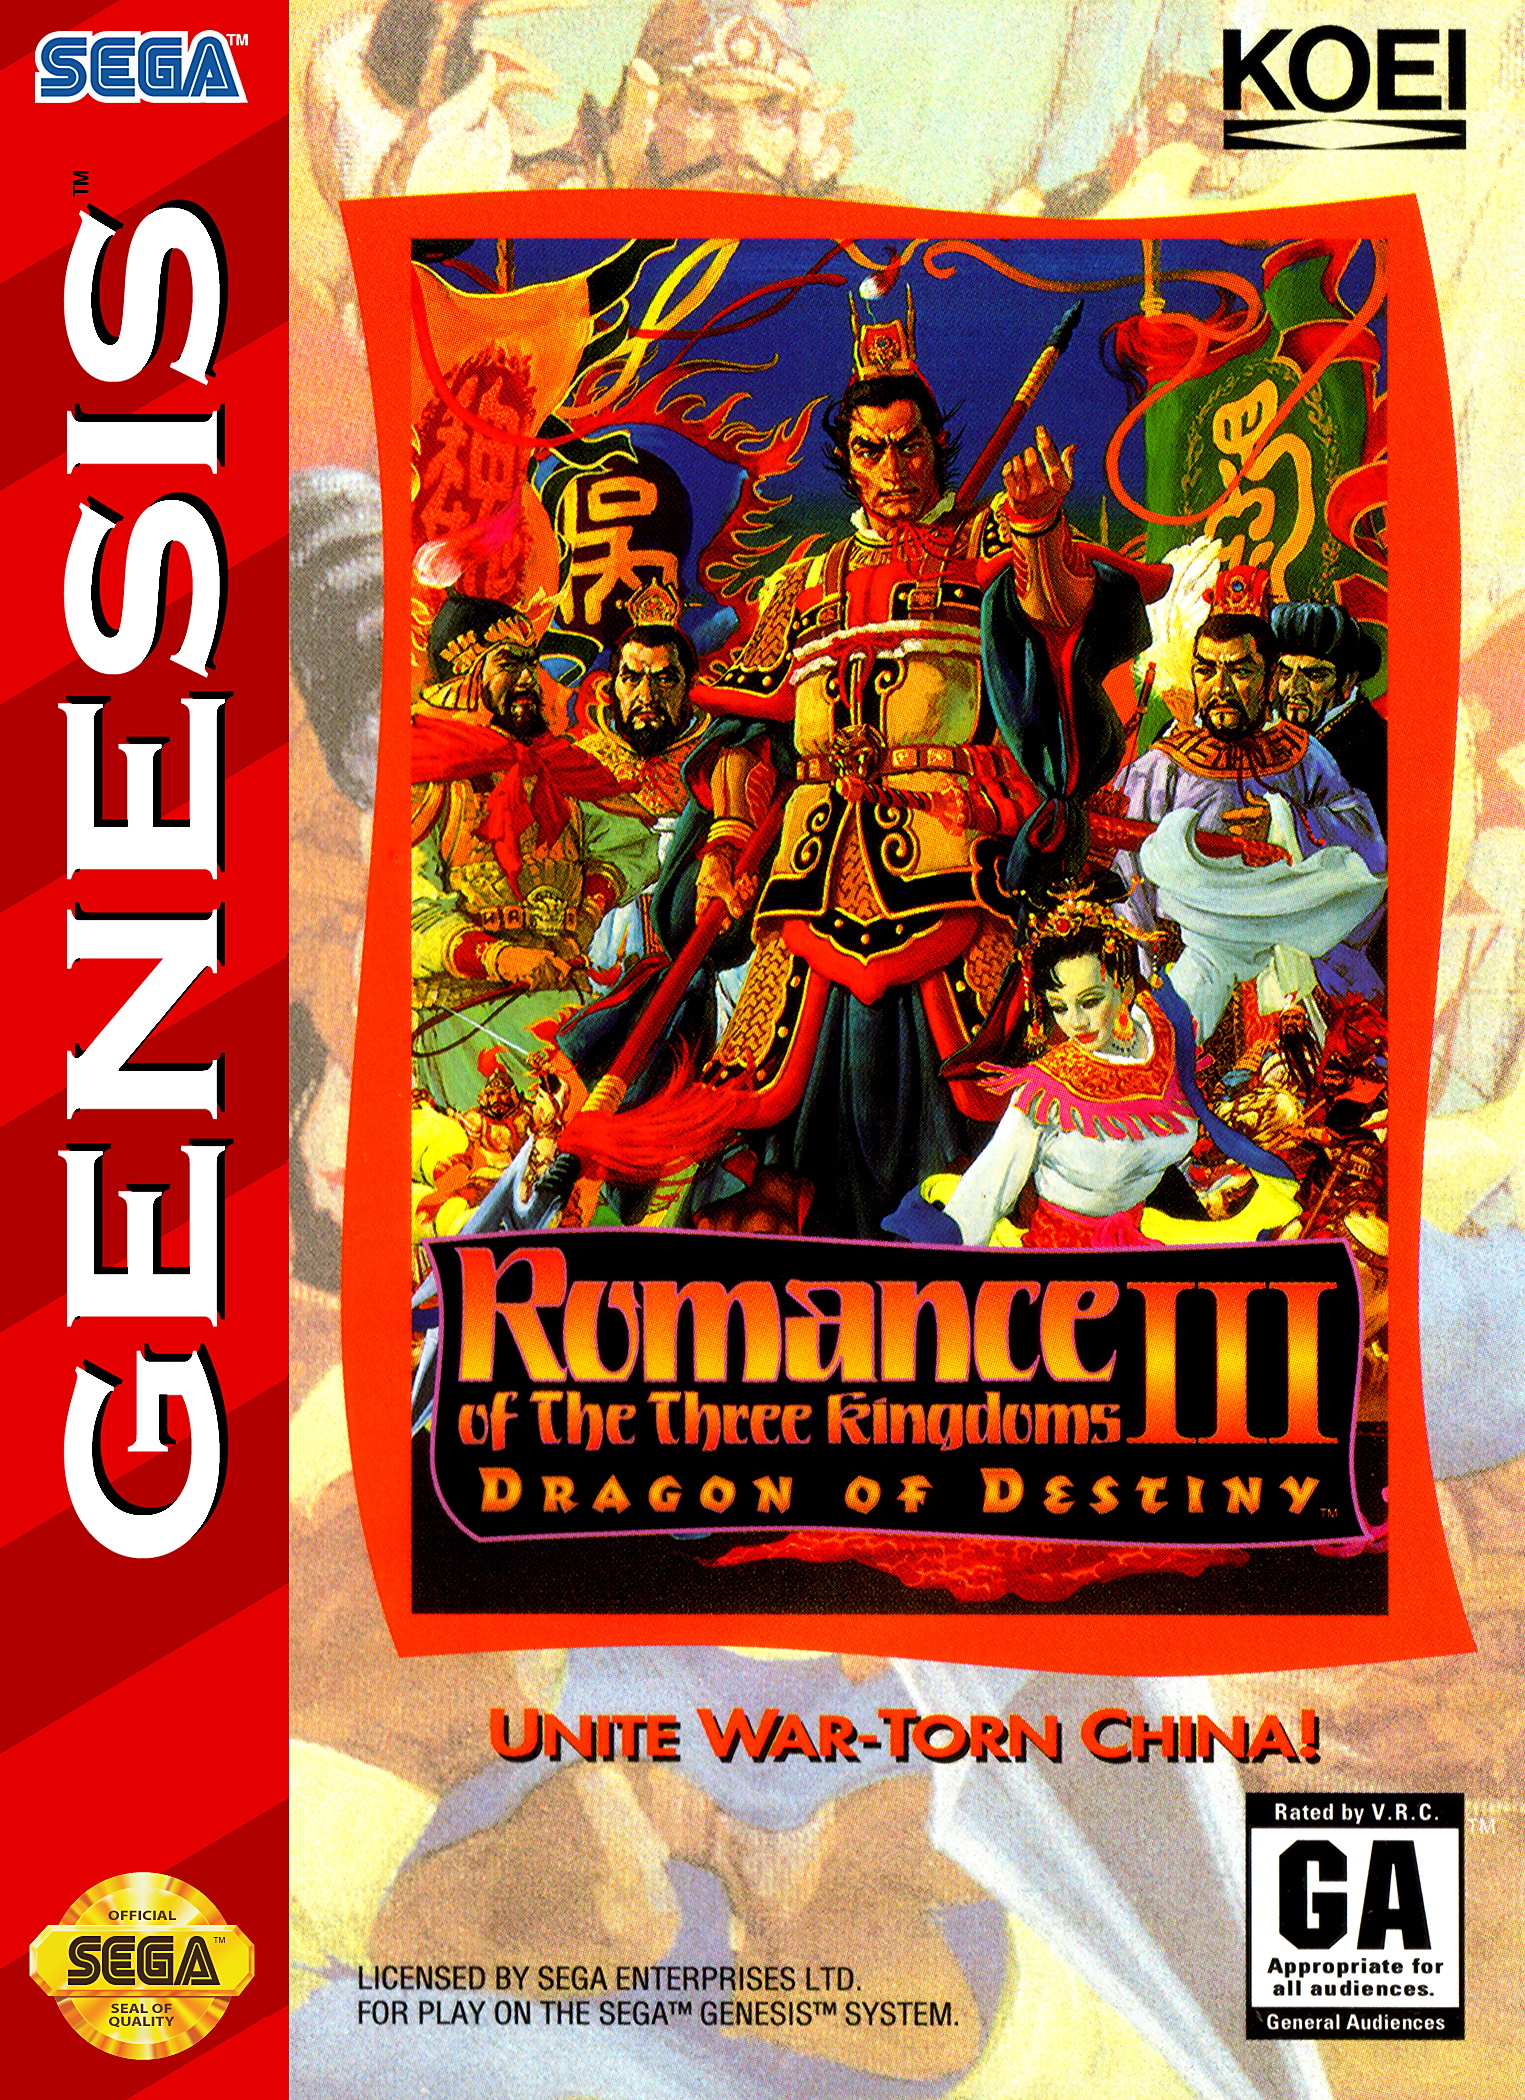 romance-of-the-three-kingdoms-iii-dragon-of-destiny-details-launchbox-games-database